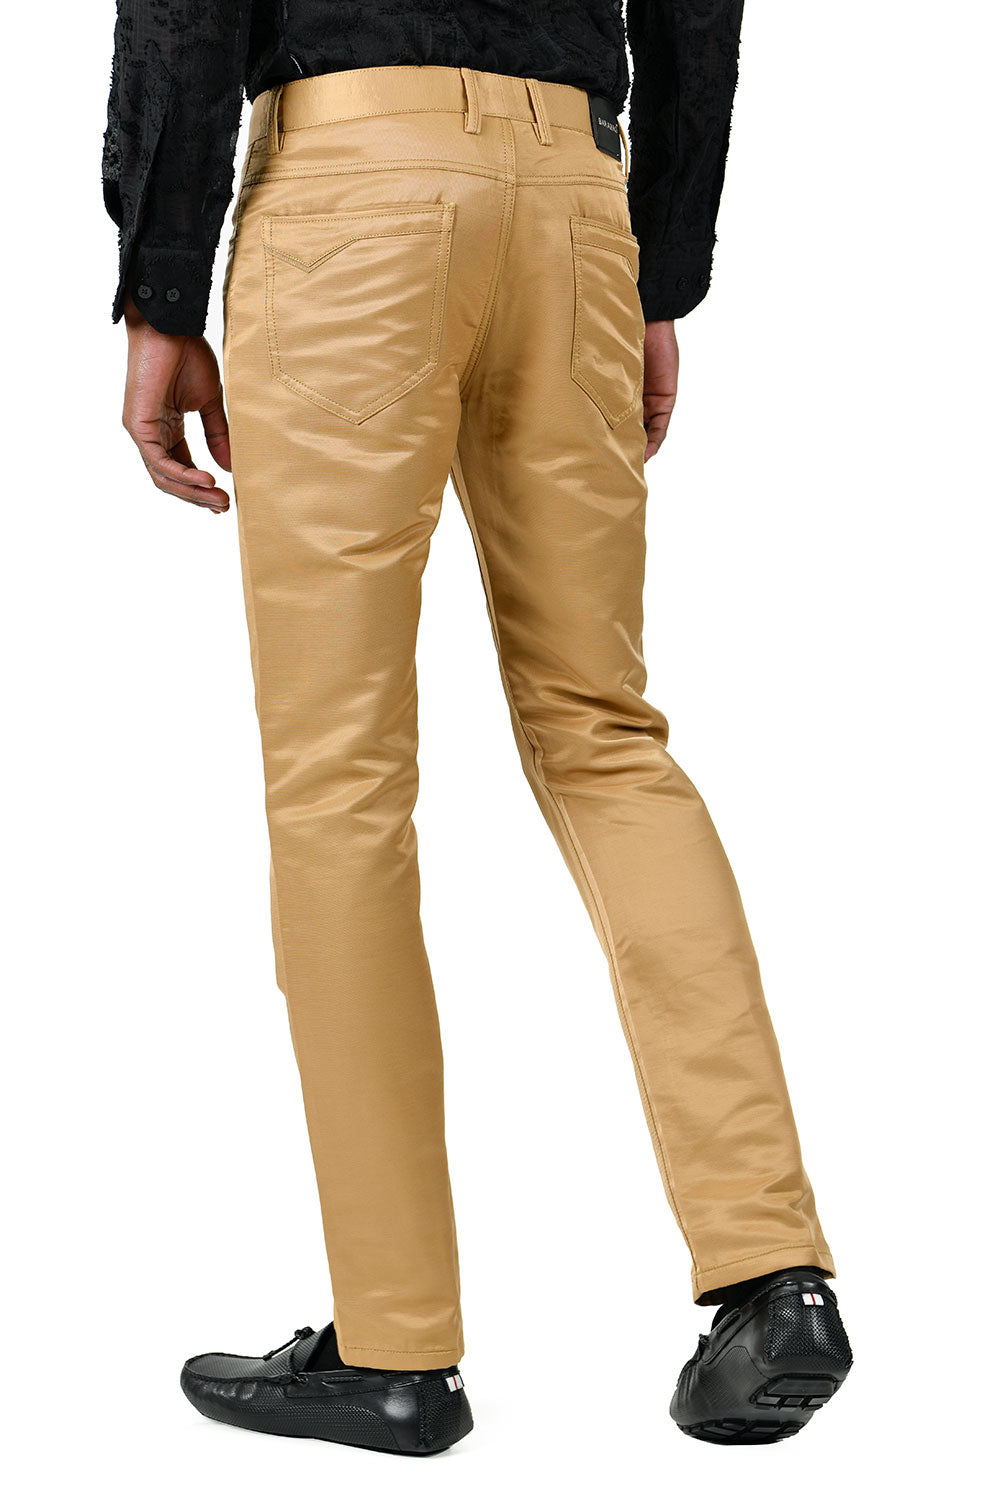 BARABAS Men's Shiny Solid Color Gold Chino Pants 2605